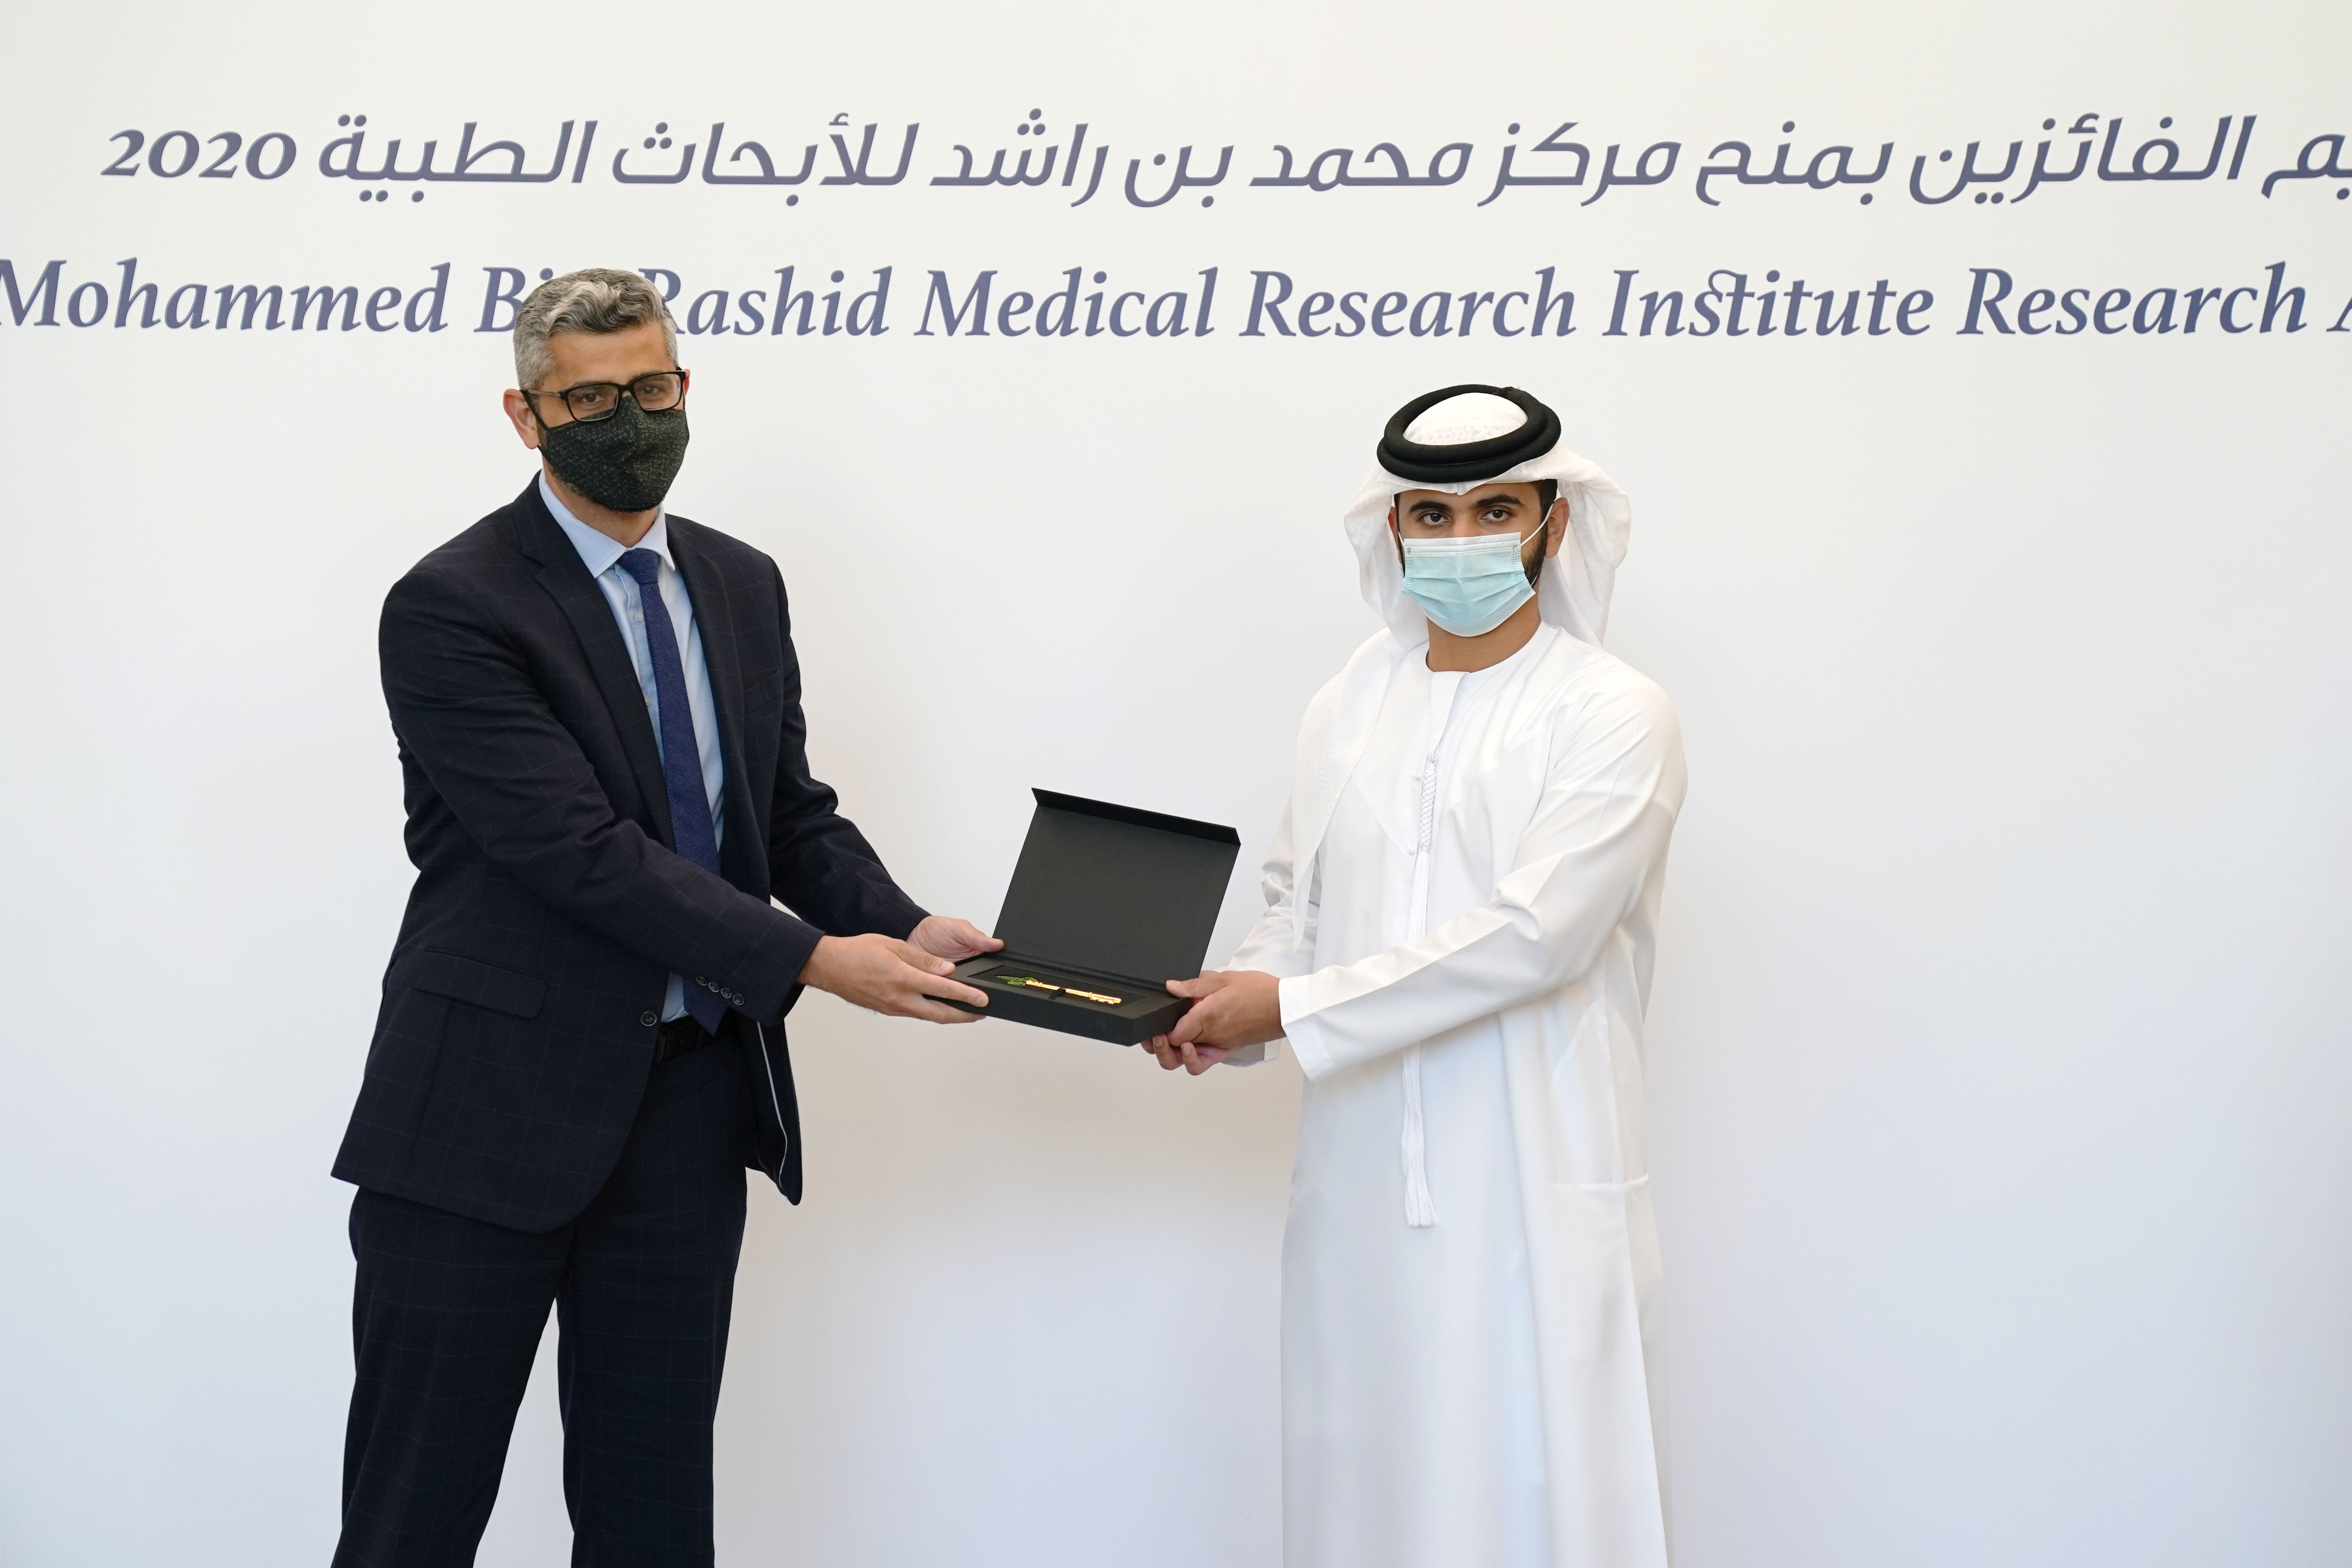 mohammed bin rashid medical research institute